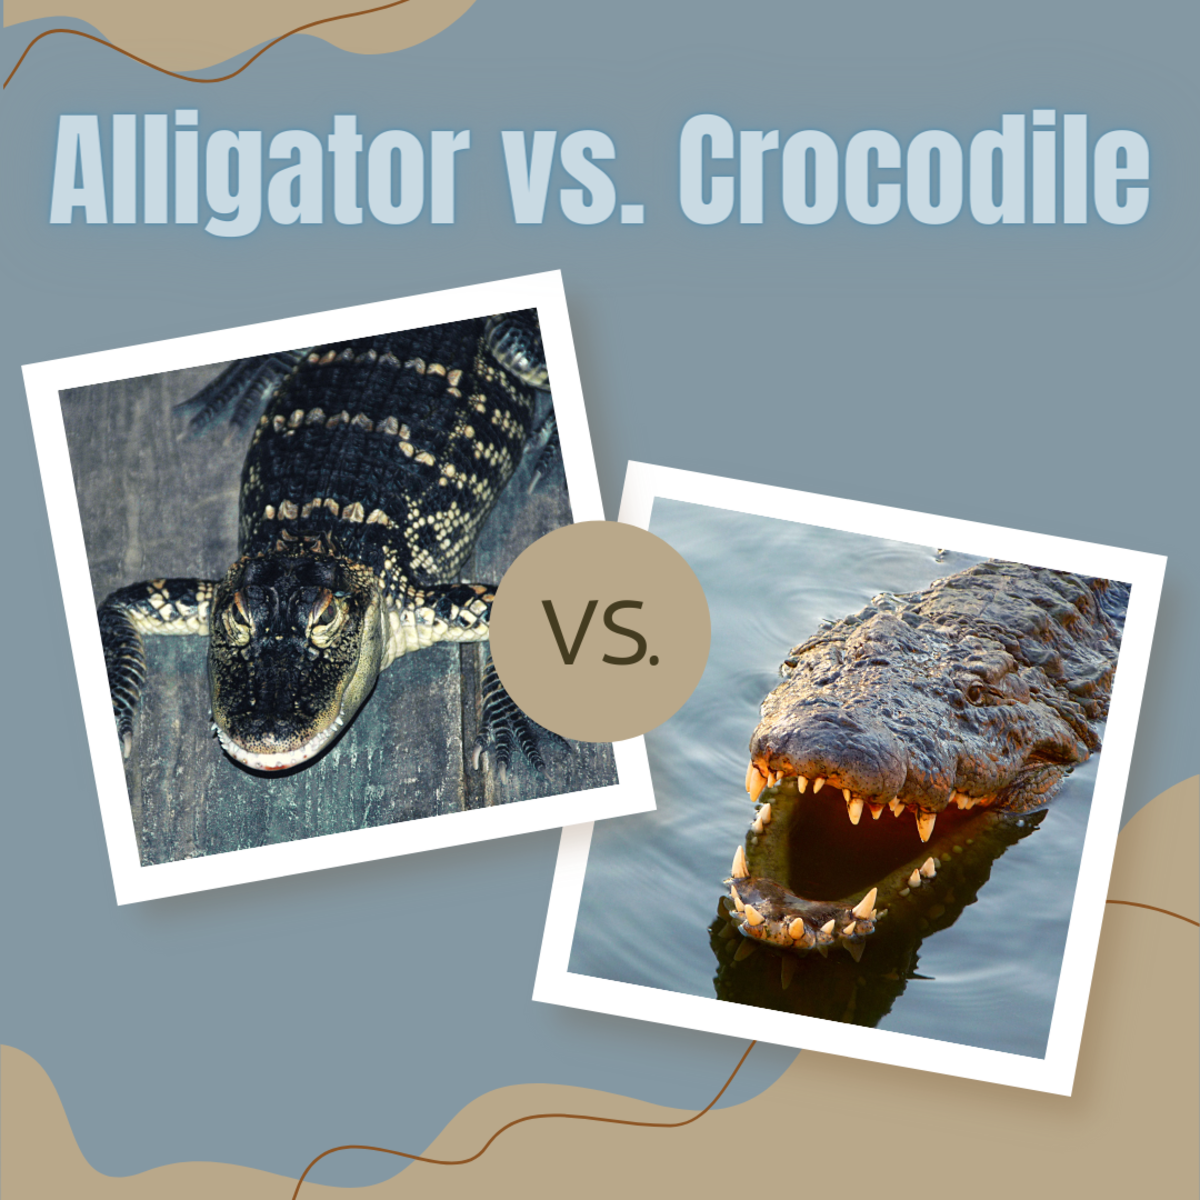 Alligators (left) have a U-shaped snout, while crocodiles (right) have a V-shaped snout.